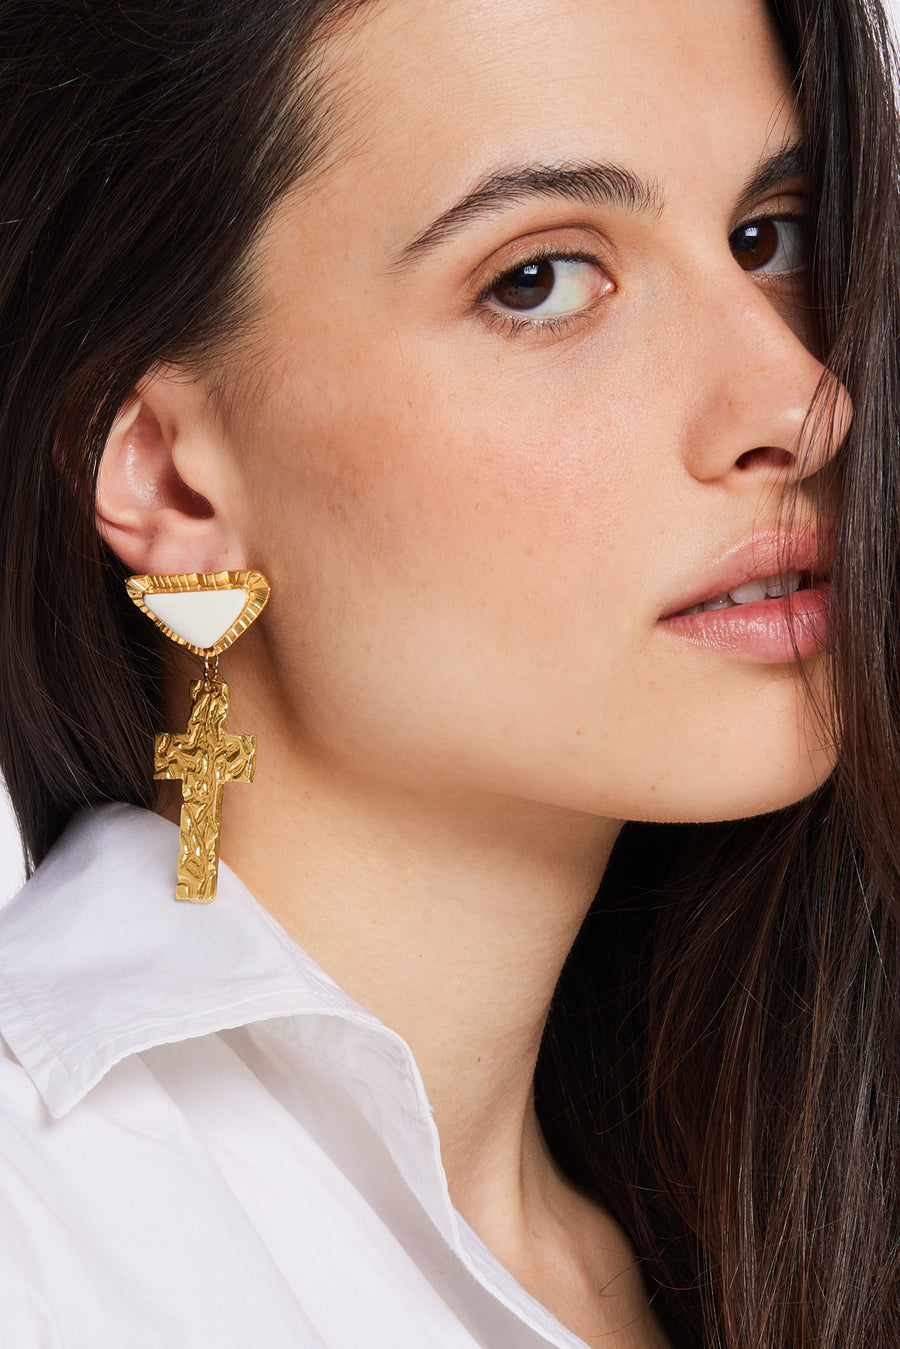 Santa Lucia earrings